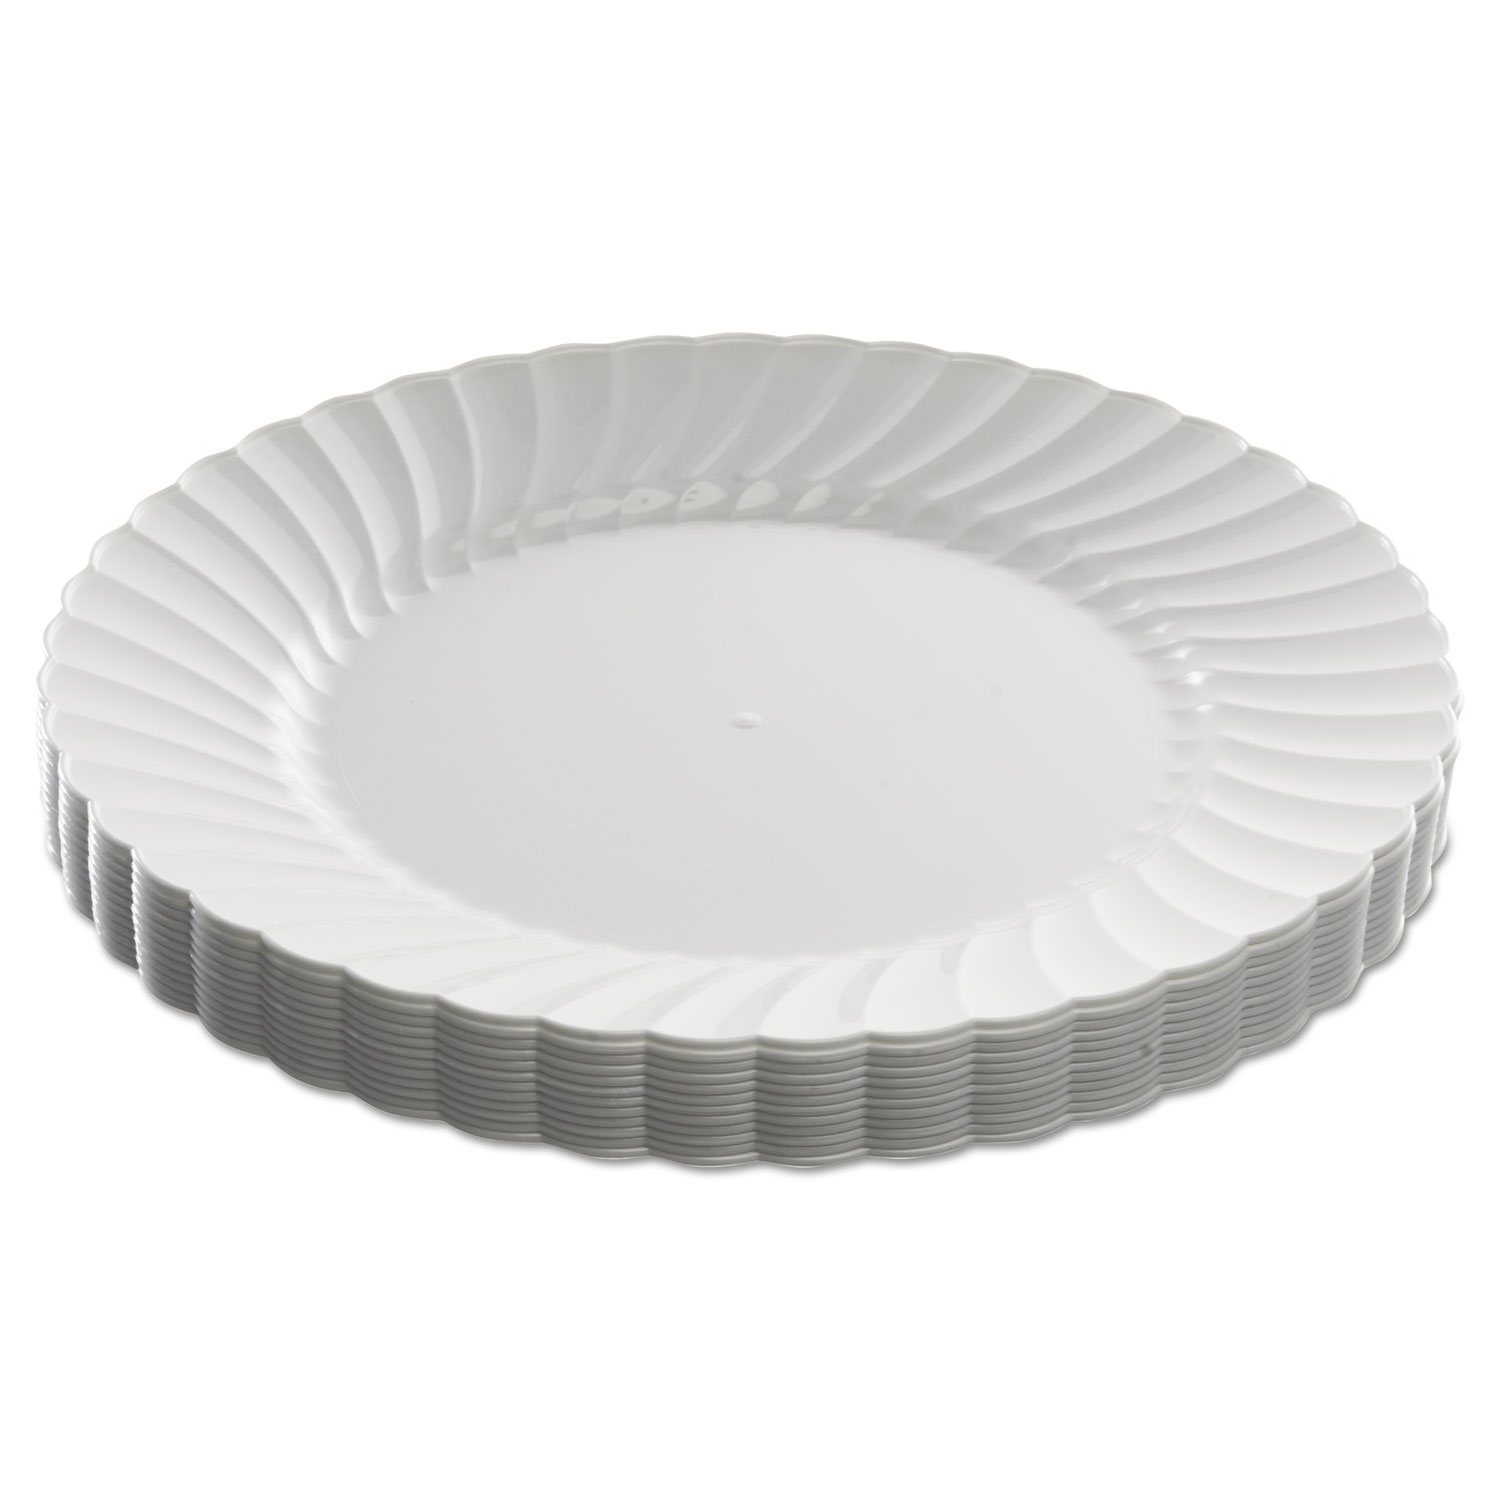 Classicware Plastic Dinnerware Plates, 9 Dia, White, 12/Pack